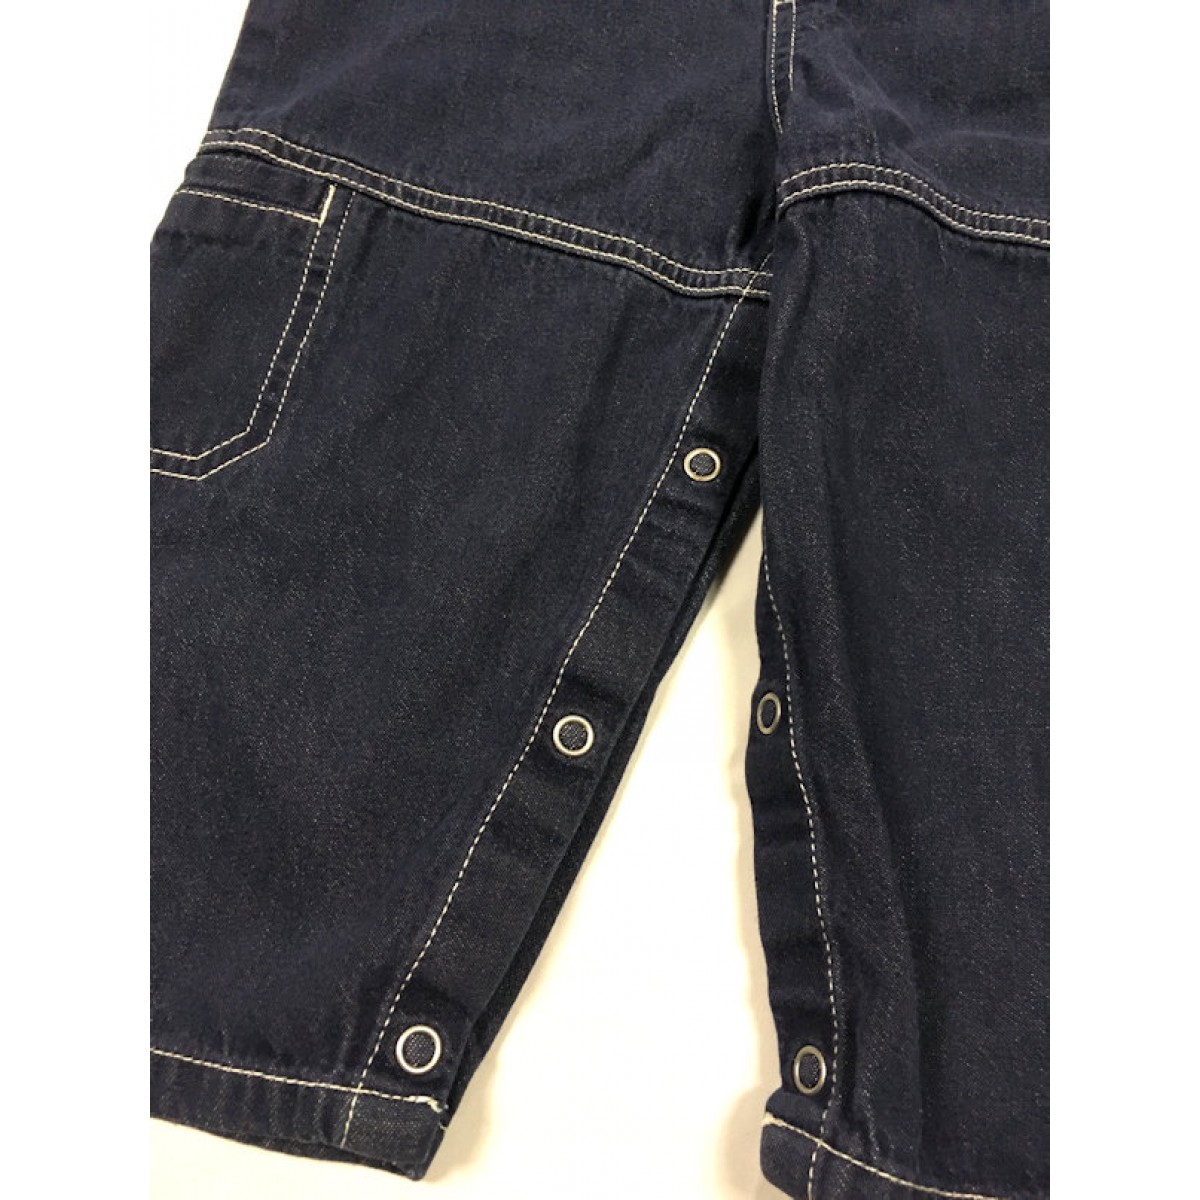 salopette jeans tommy / 18-24 mois